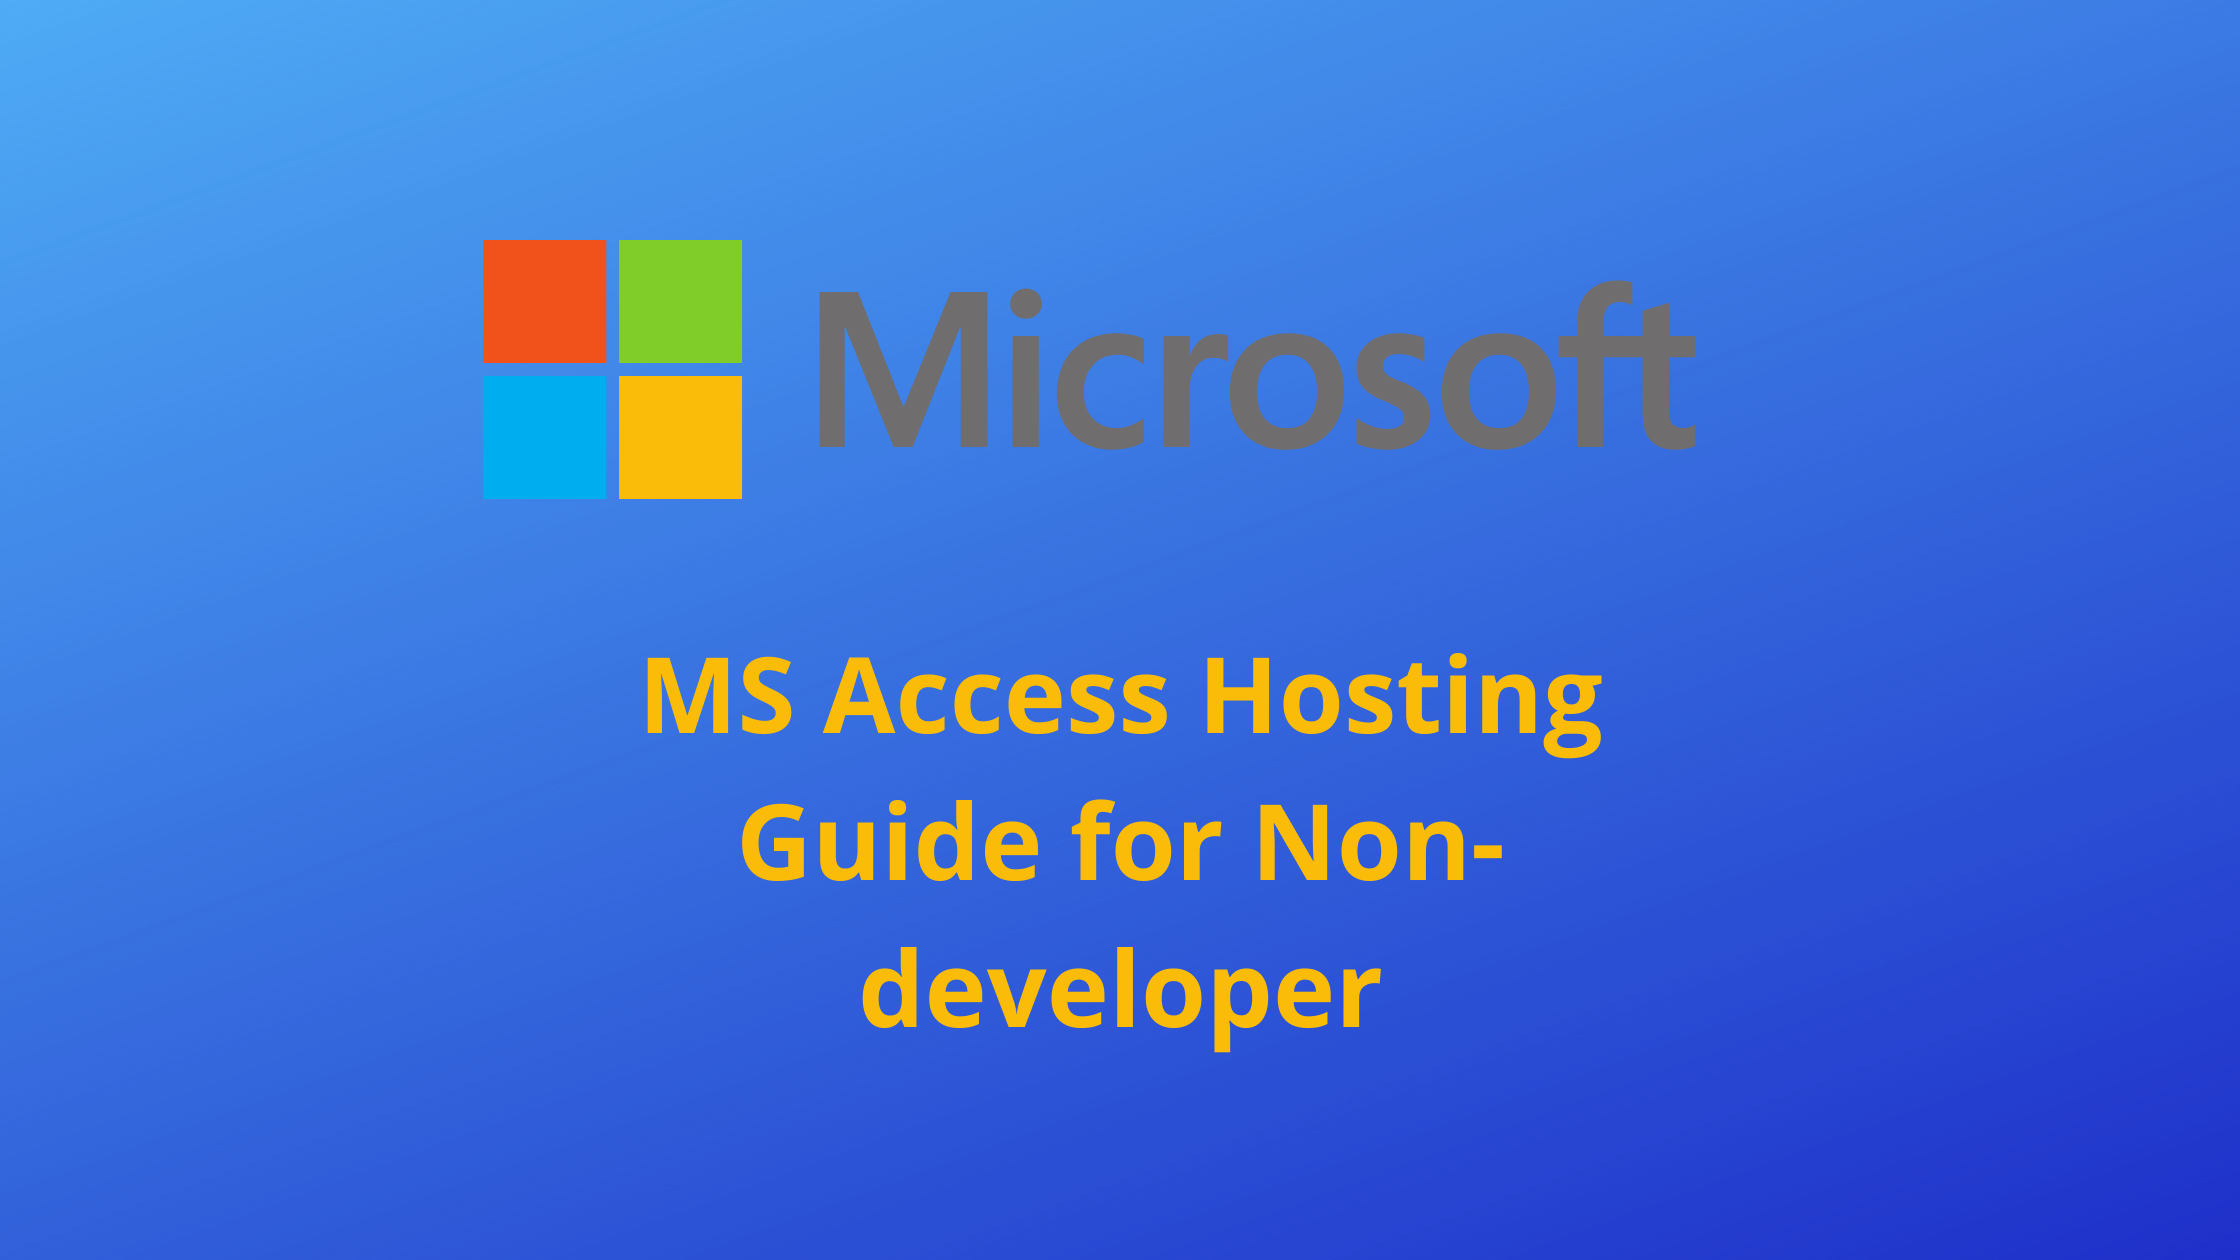 MS Access Hosting Guide for Non-developer